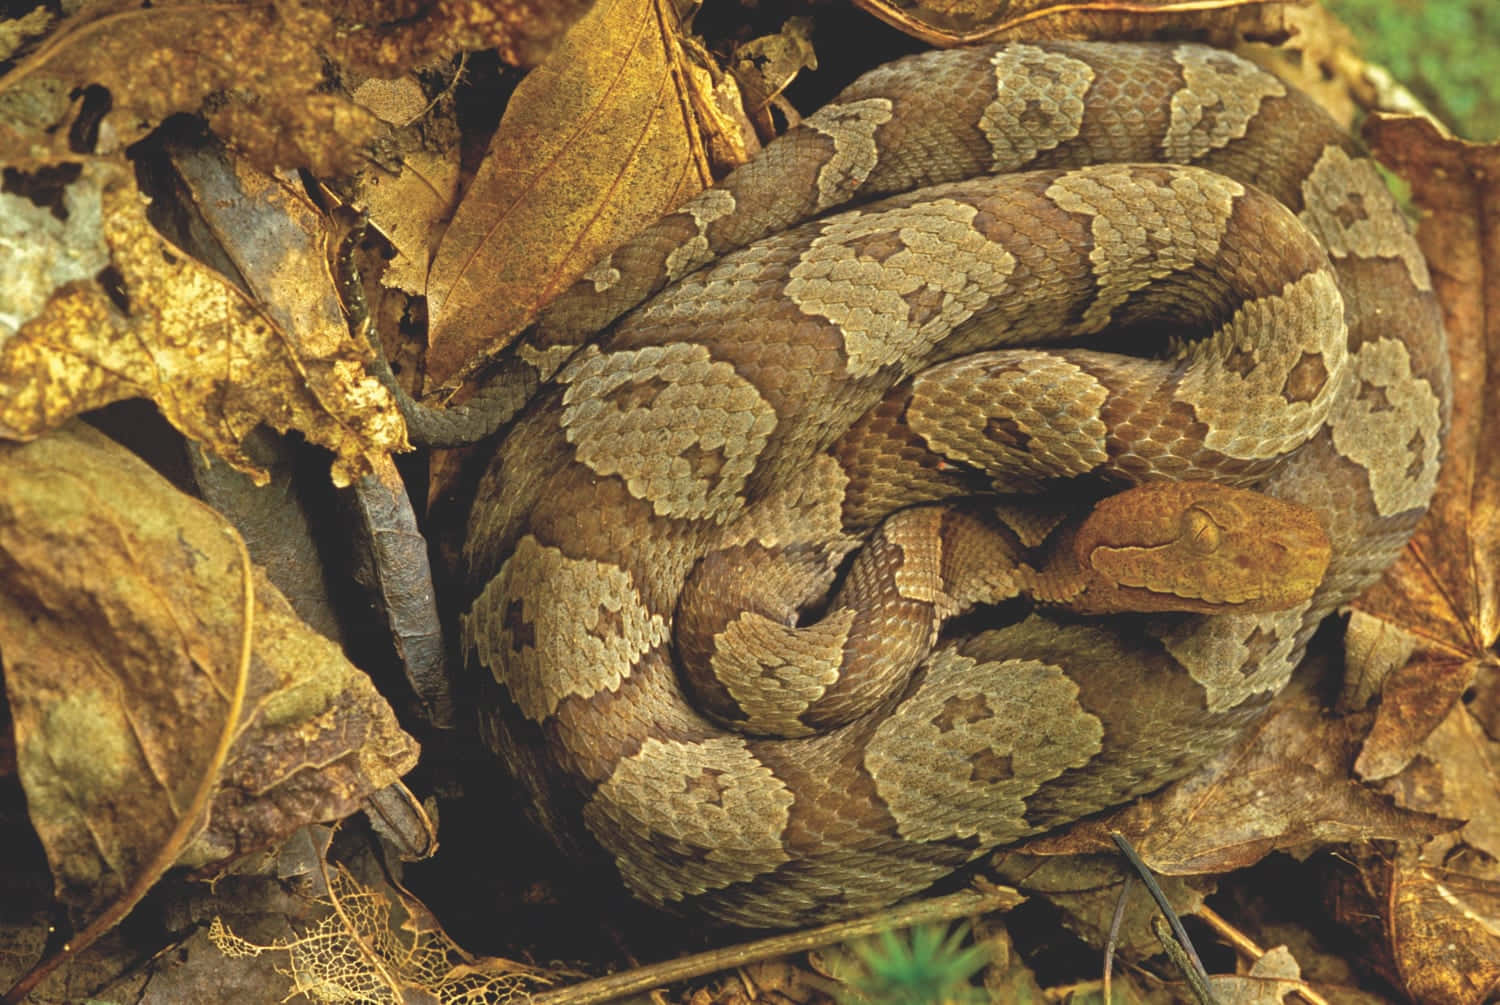 Copperhead Snake among Rocks and Leaves